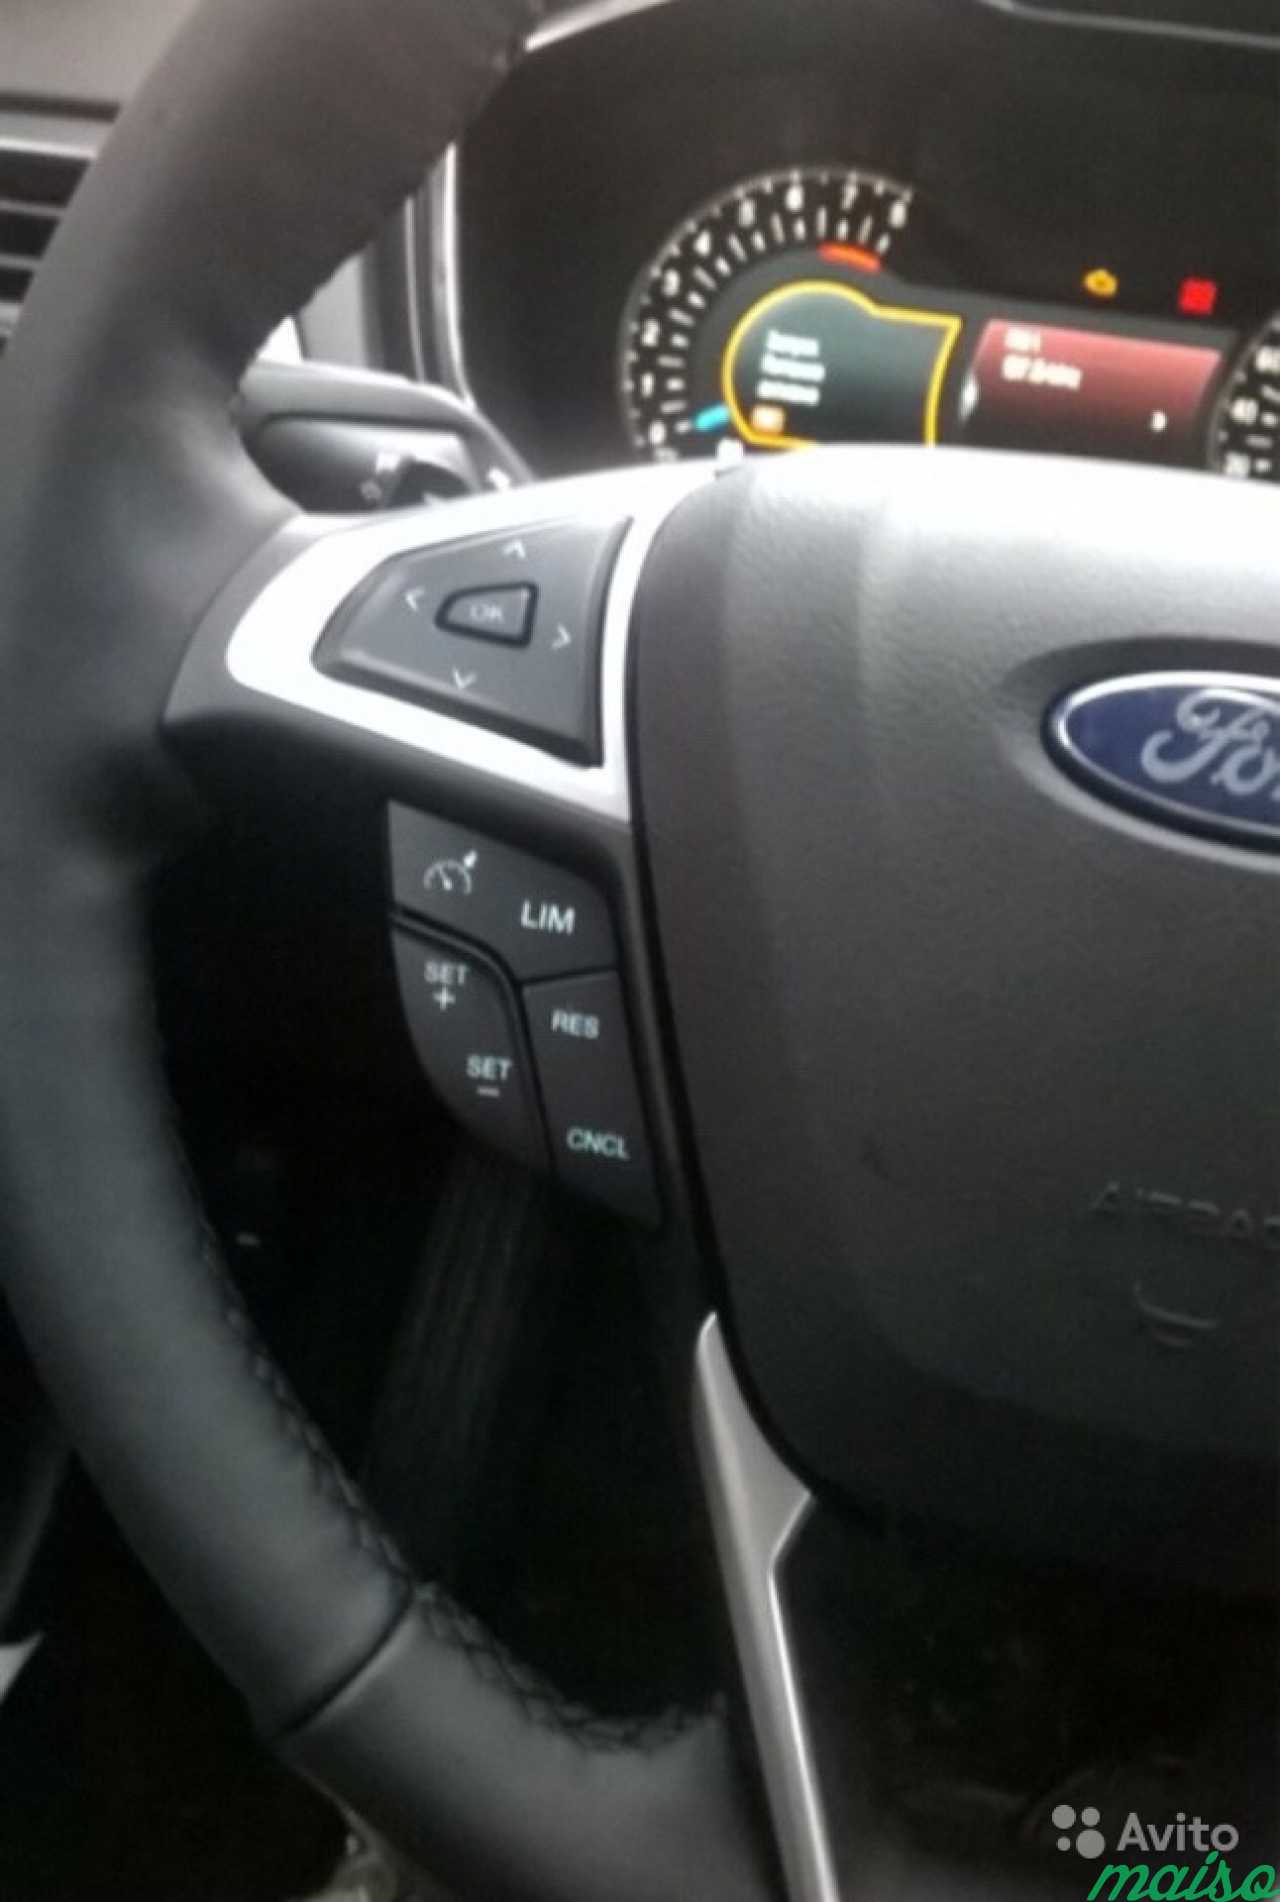 Круиз контроль Ford Mondeo 5 (Форд Мондео) в Санкт-Петербурге. Фото 1